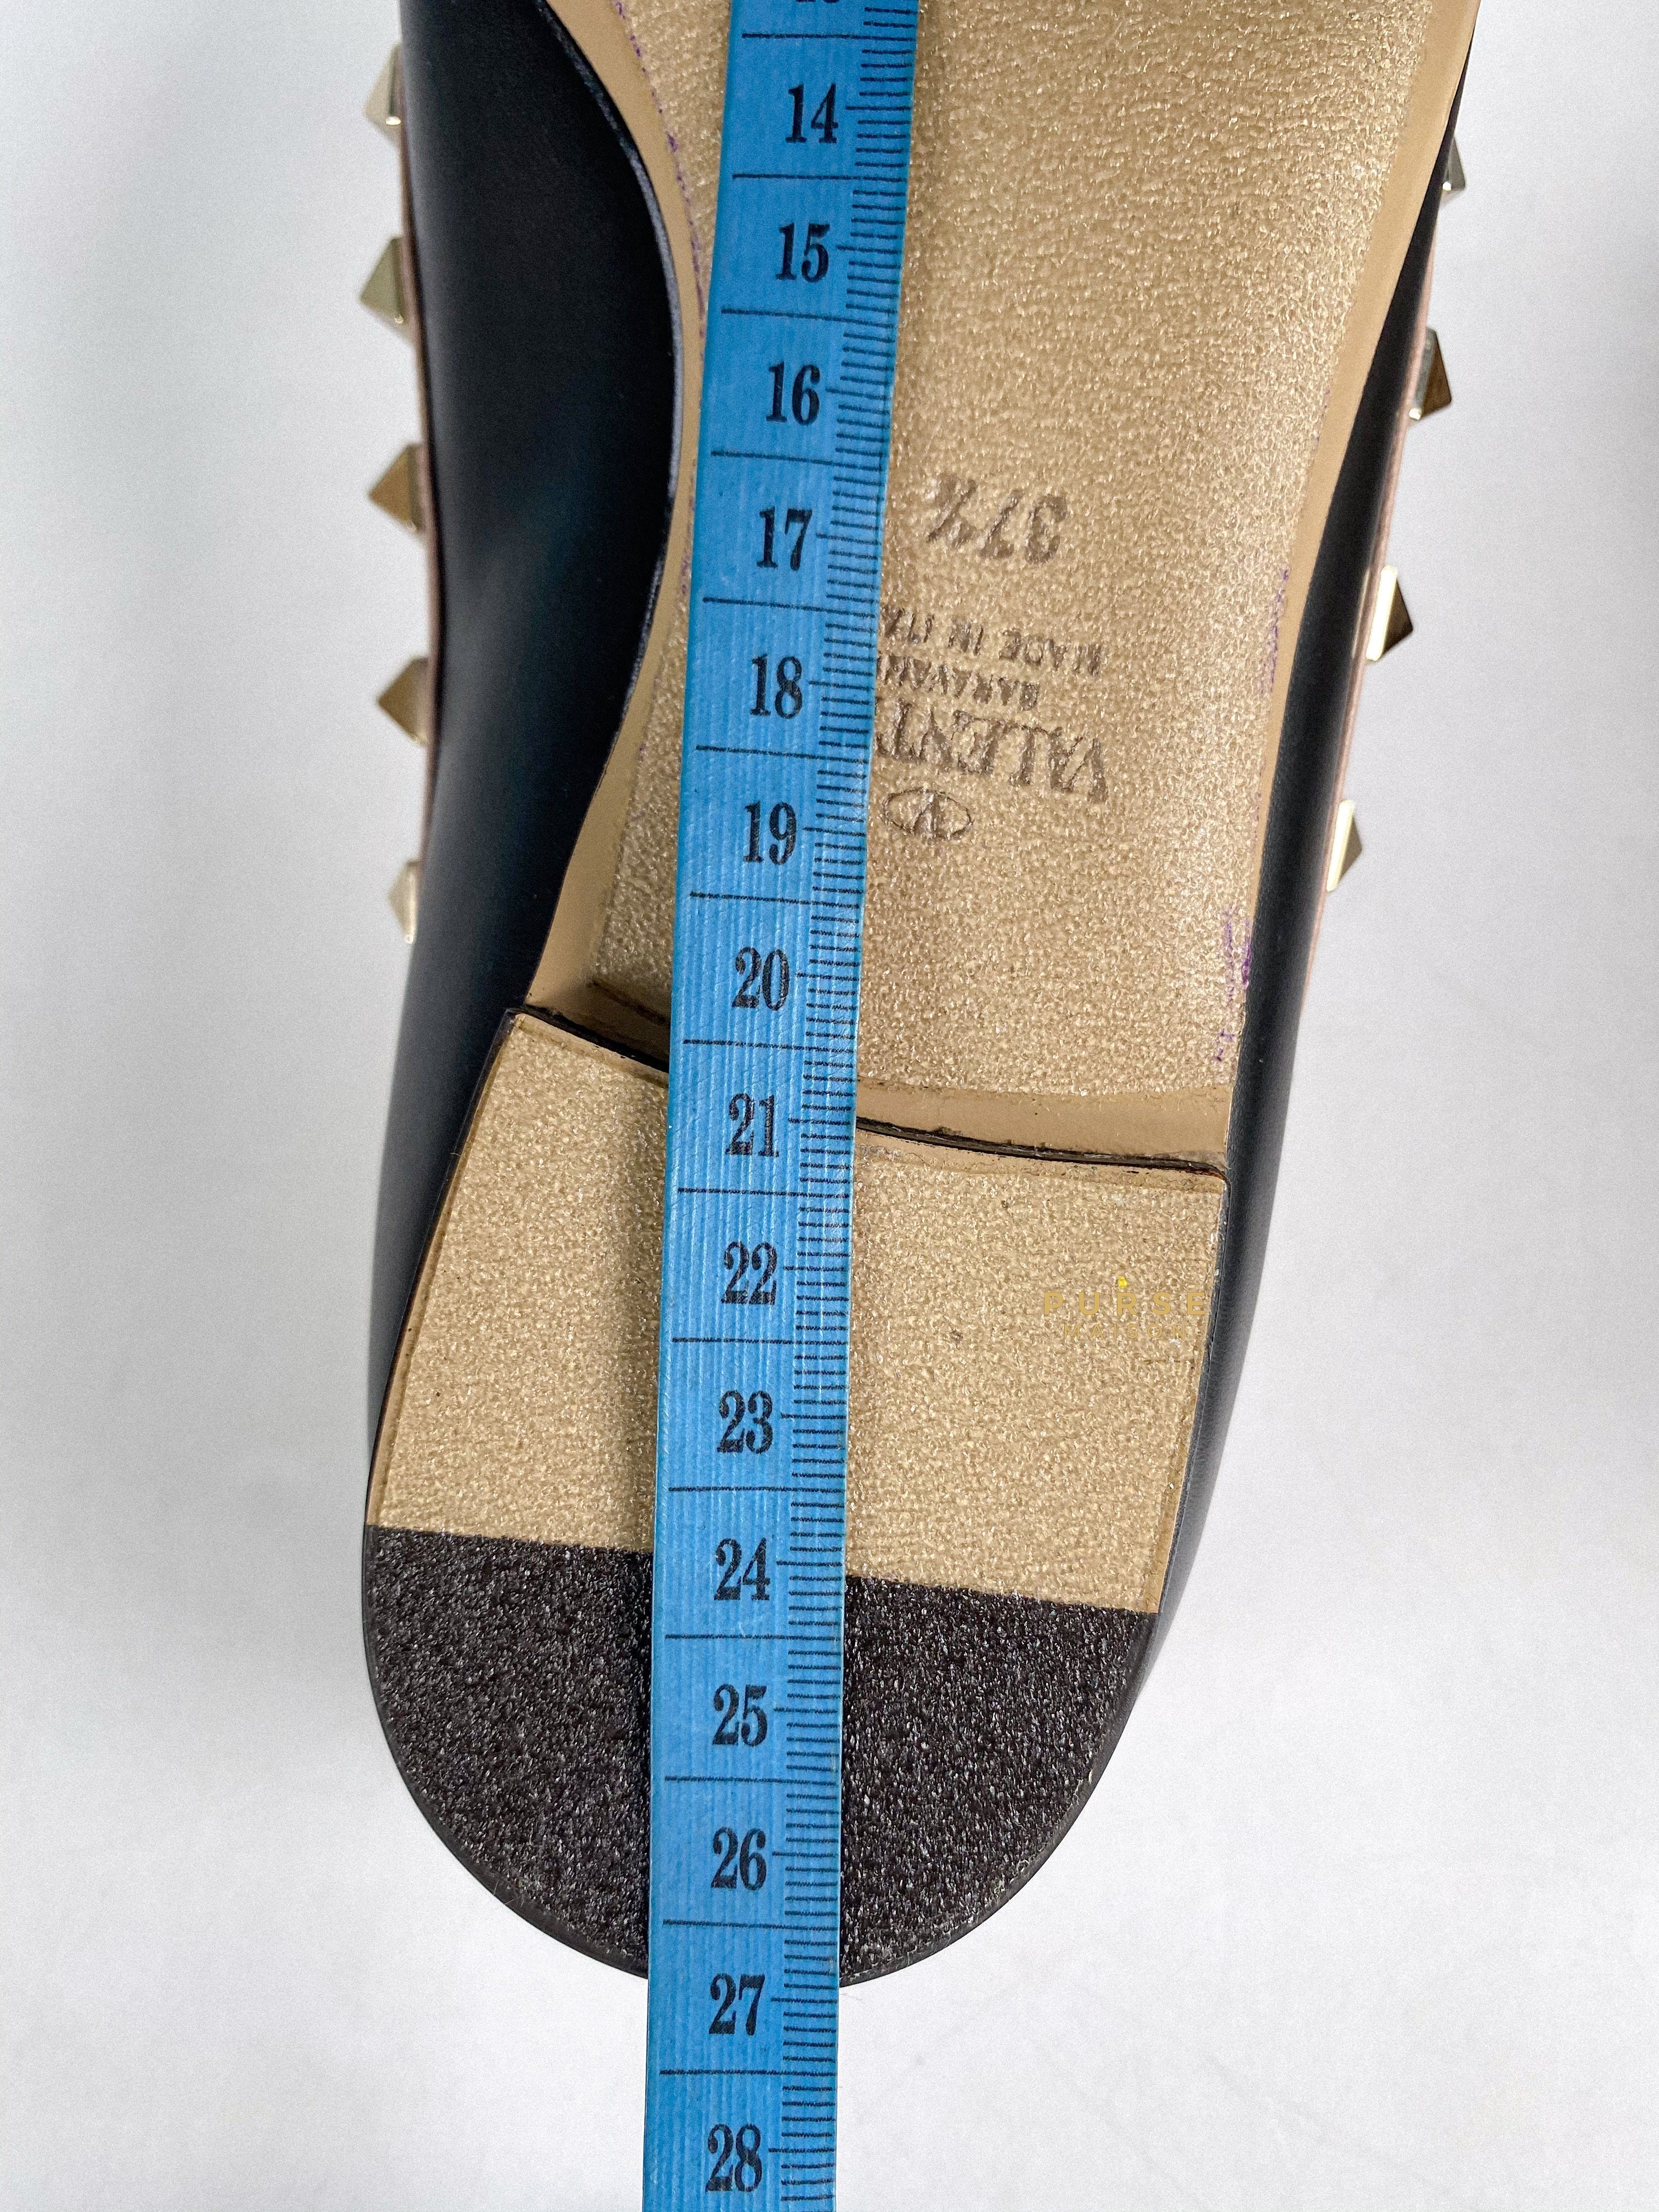 Valentino Rockstud Ballerina Flat Shoes Size 37.5 EU (25cm)